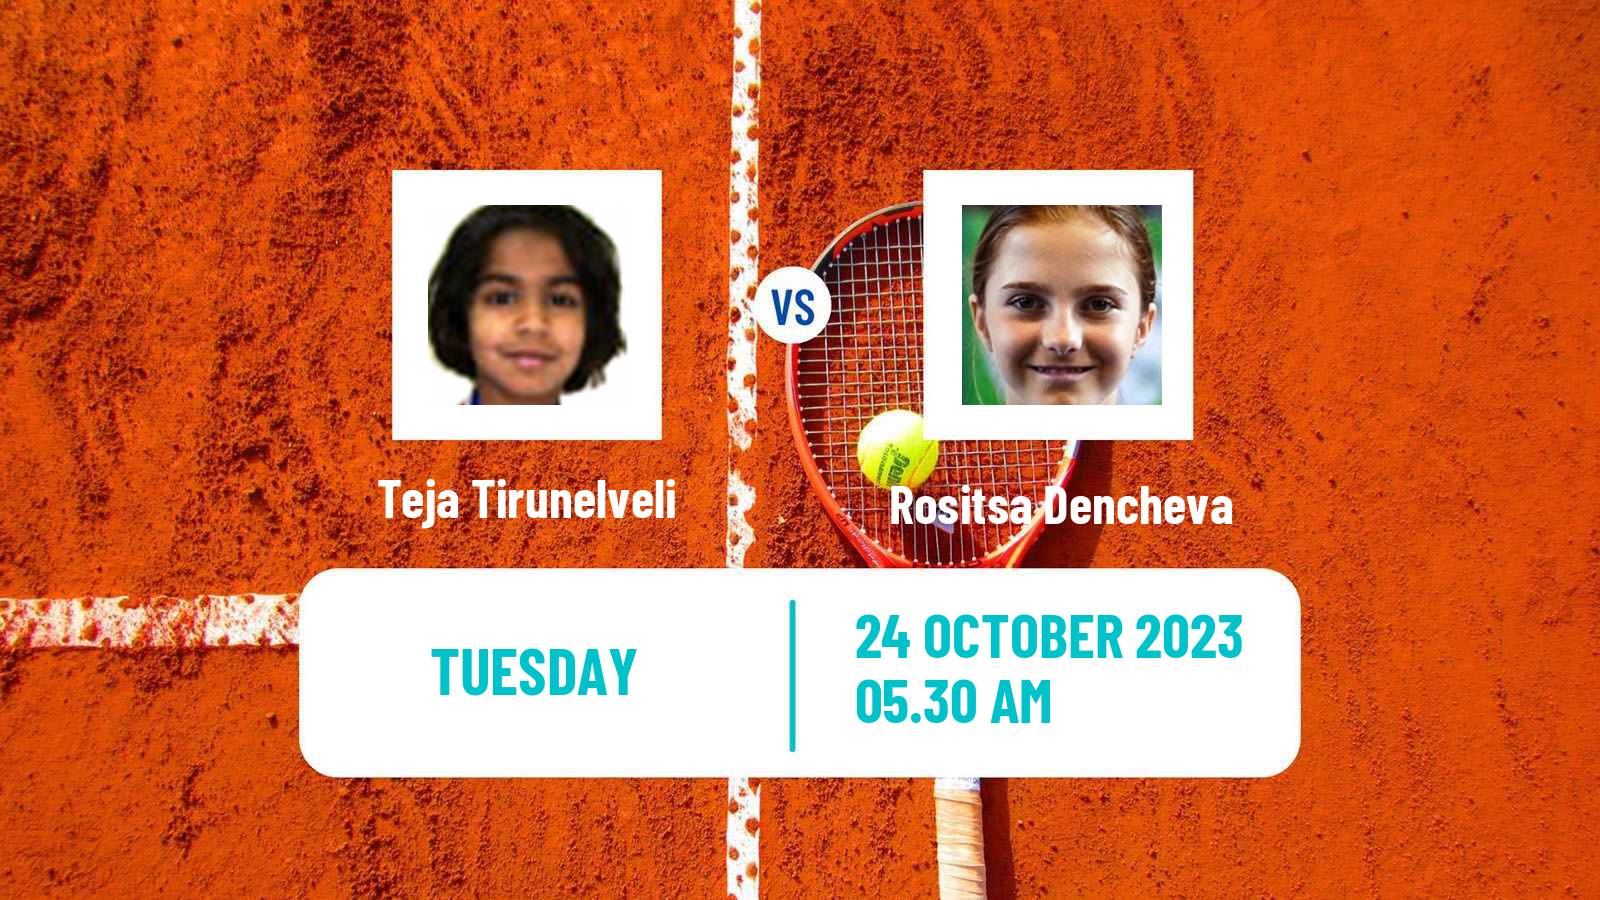 Tennis ITF W15 Monastir 51 Women 2023 Teja Tirunelveli - Rositsa Dencheva